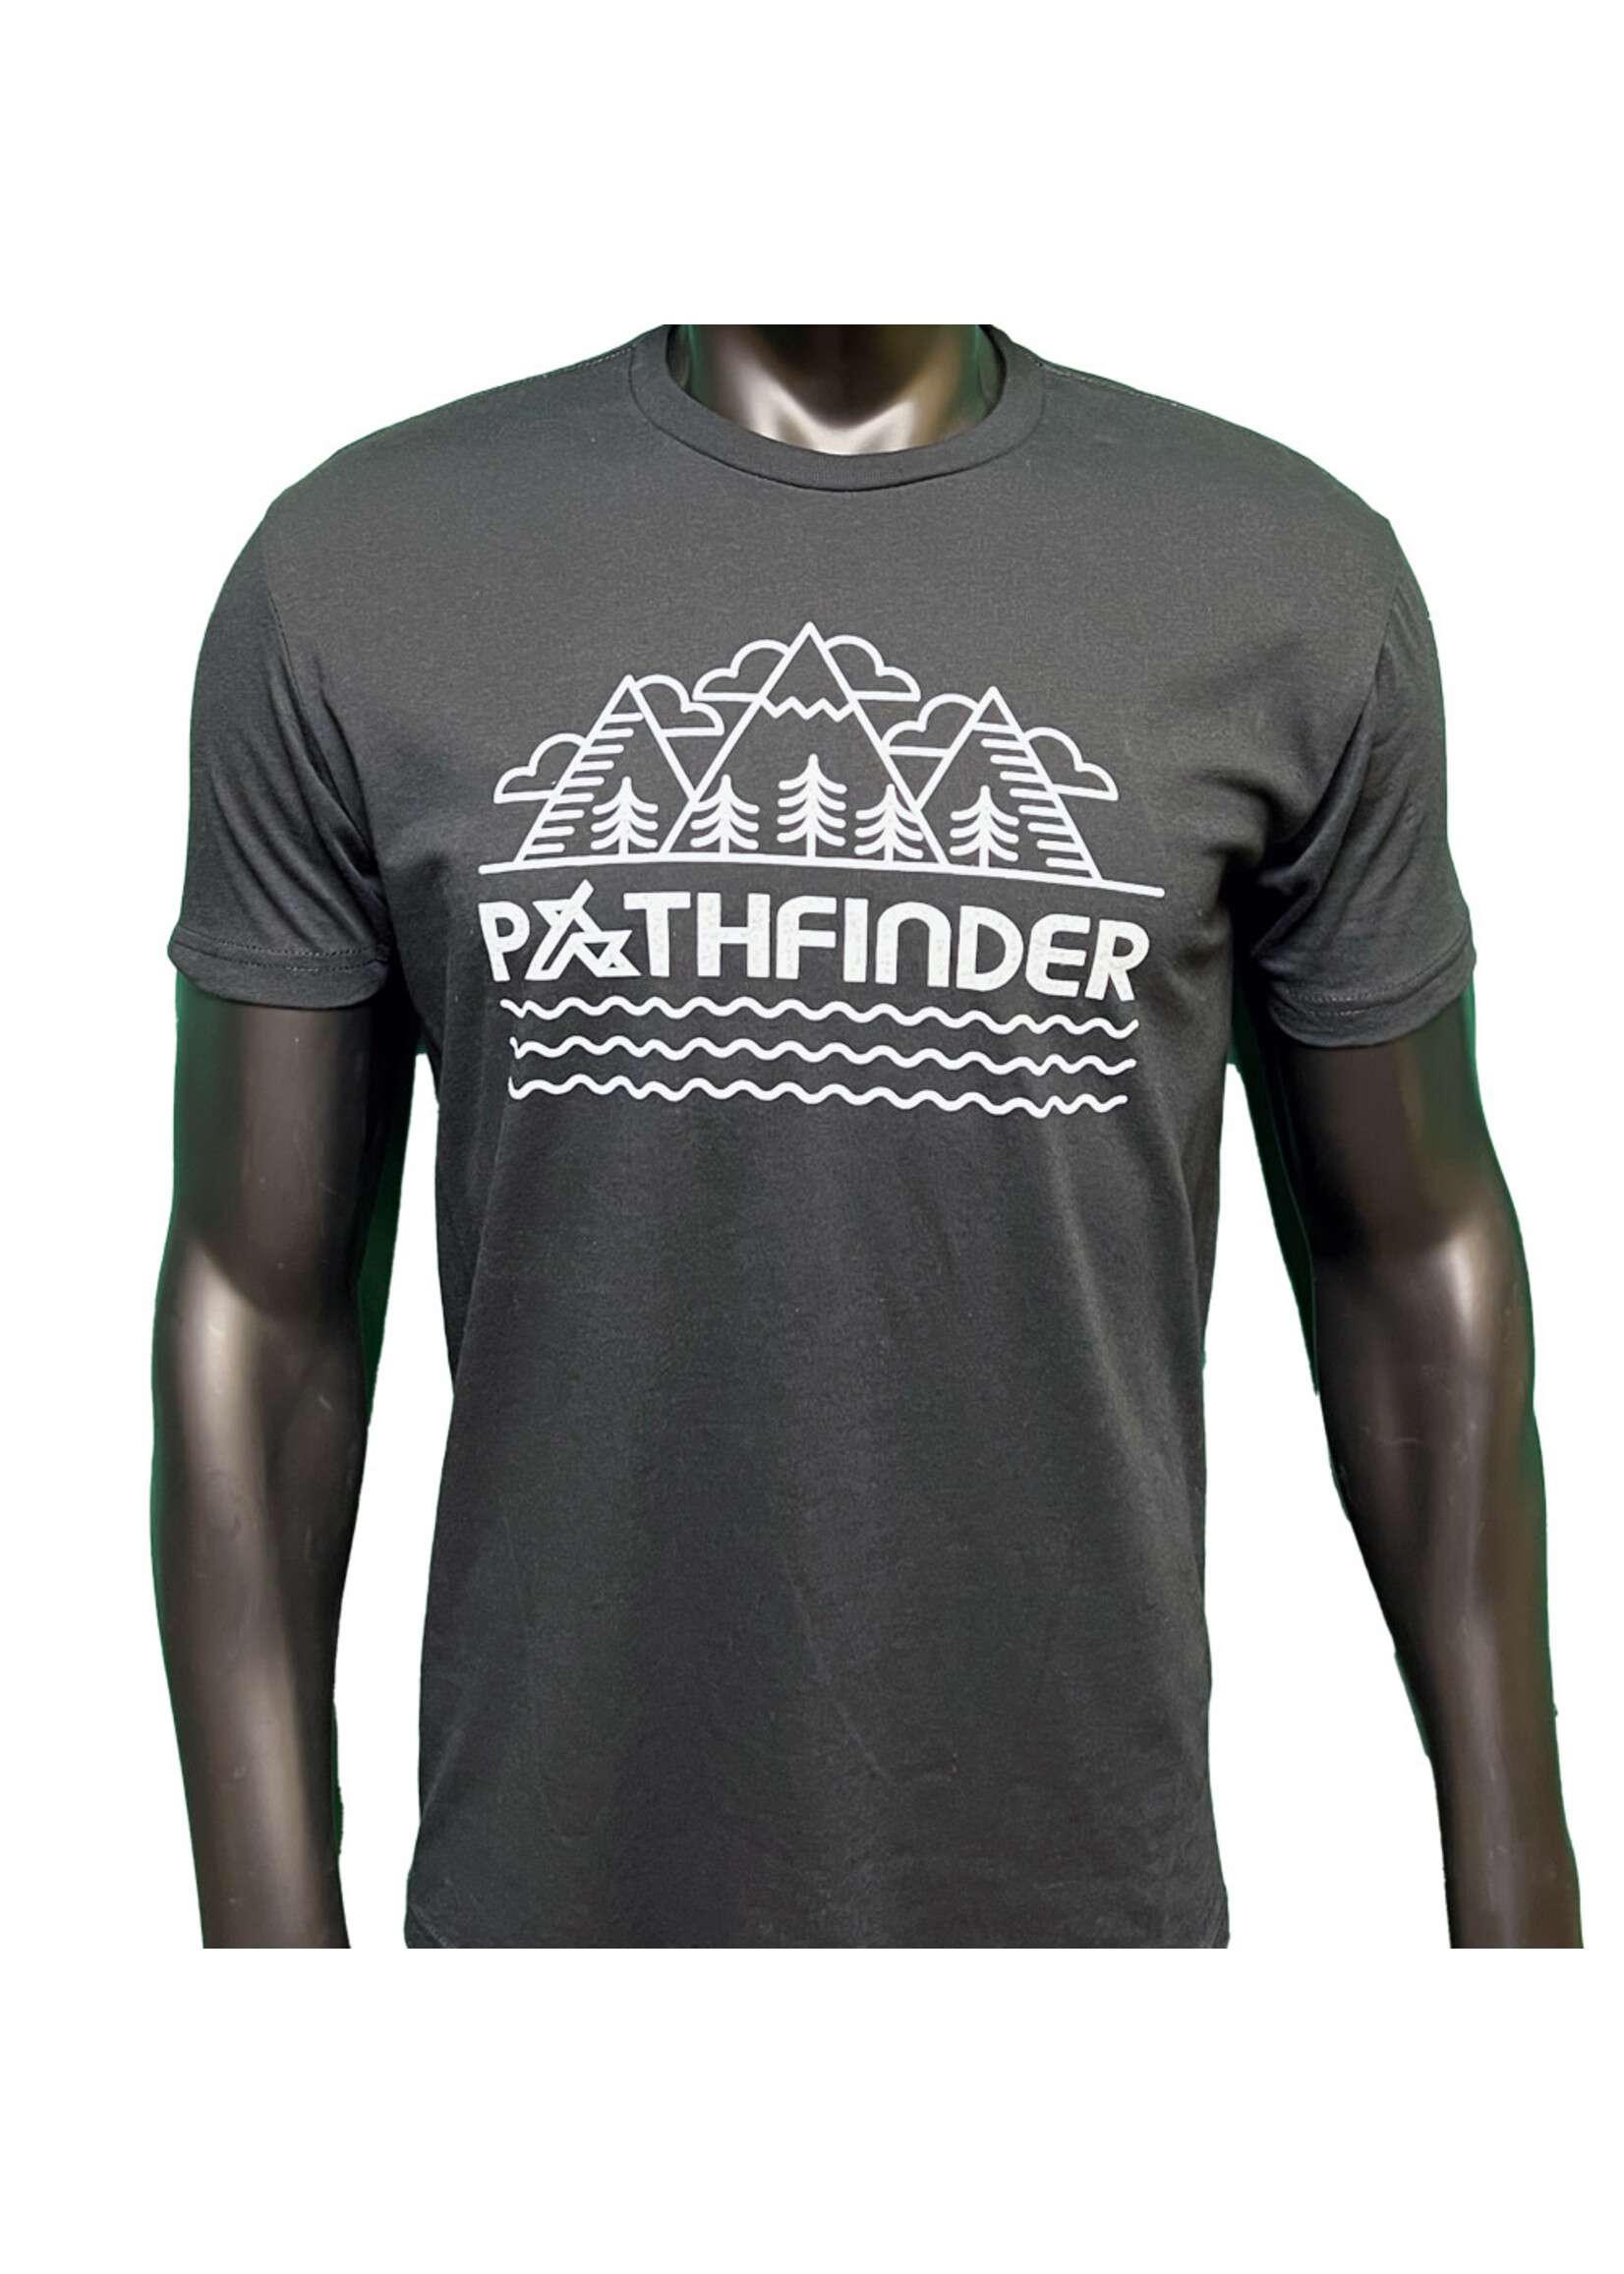 Pathfinder Linescape Tee Black/White